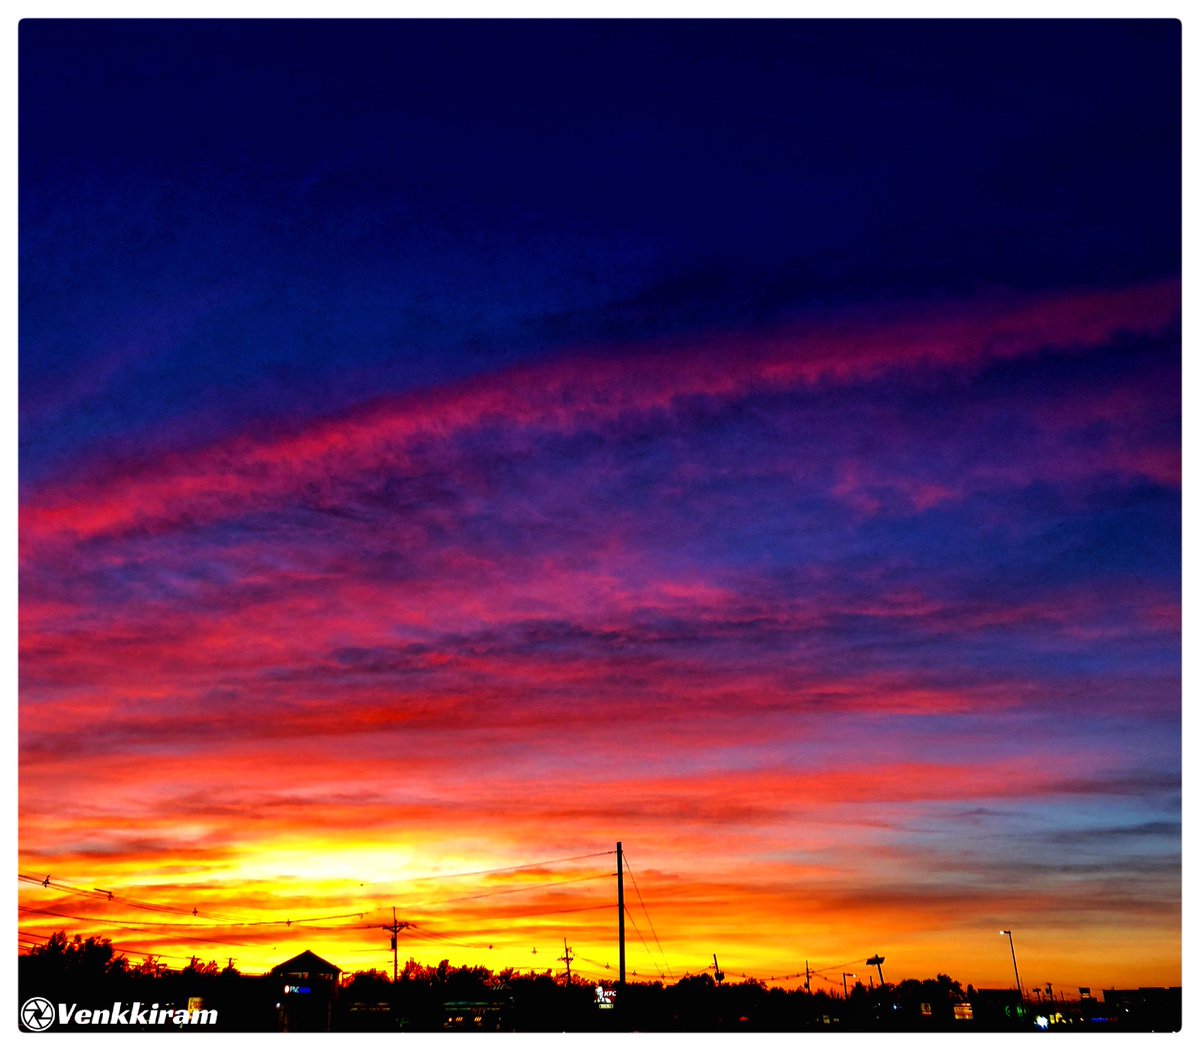 Show me your pastel shots  

Mine, 👇

Pastel #Sunset 🌅 

#nature #sky #cloud #photography #venkkiclicks